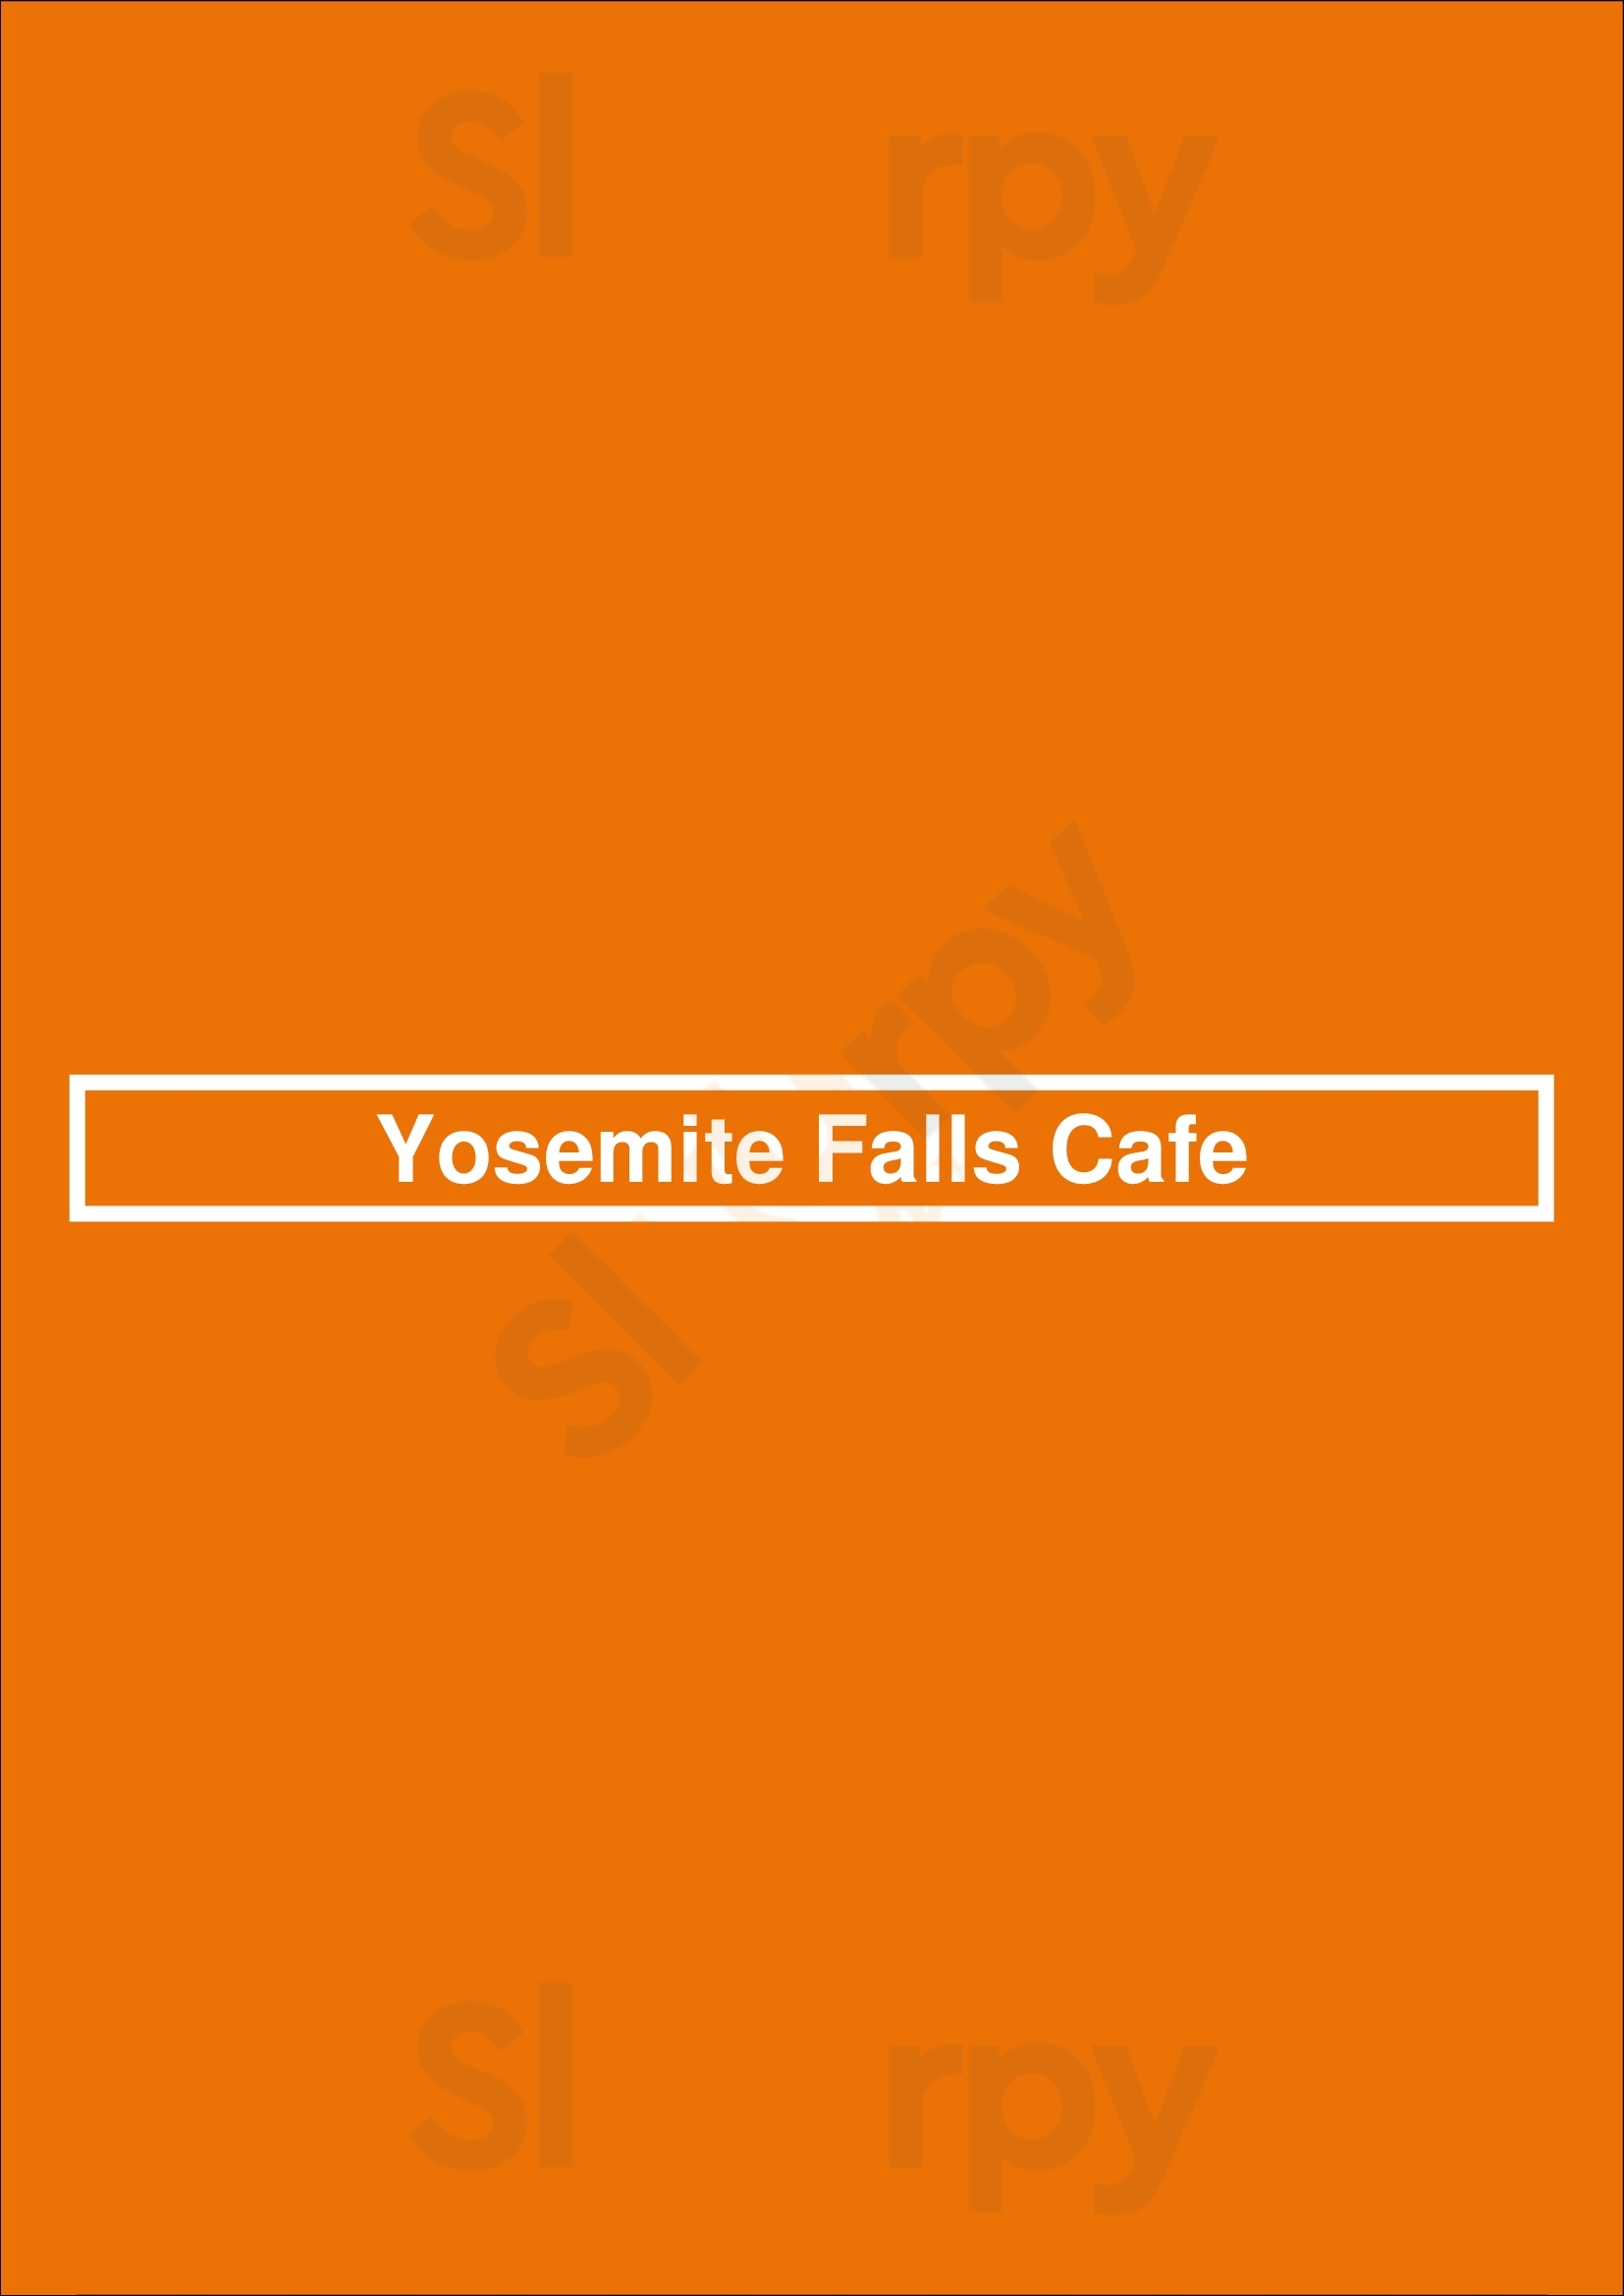 Yosemite Falls Cafe Clovis Menu - 1